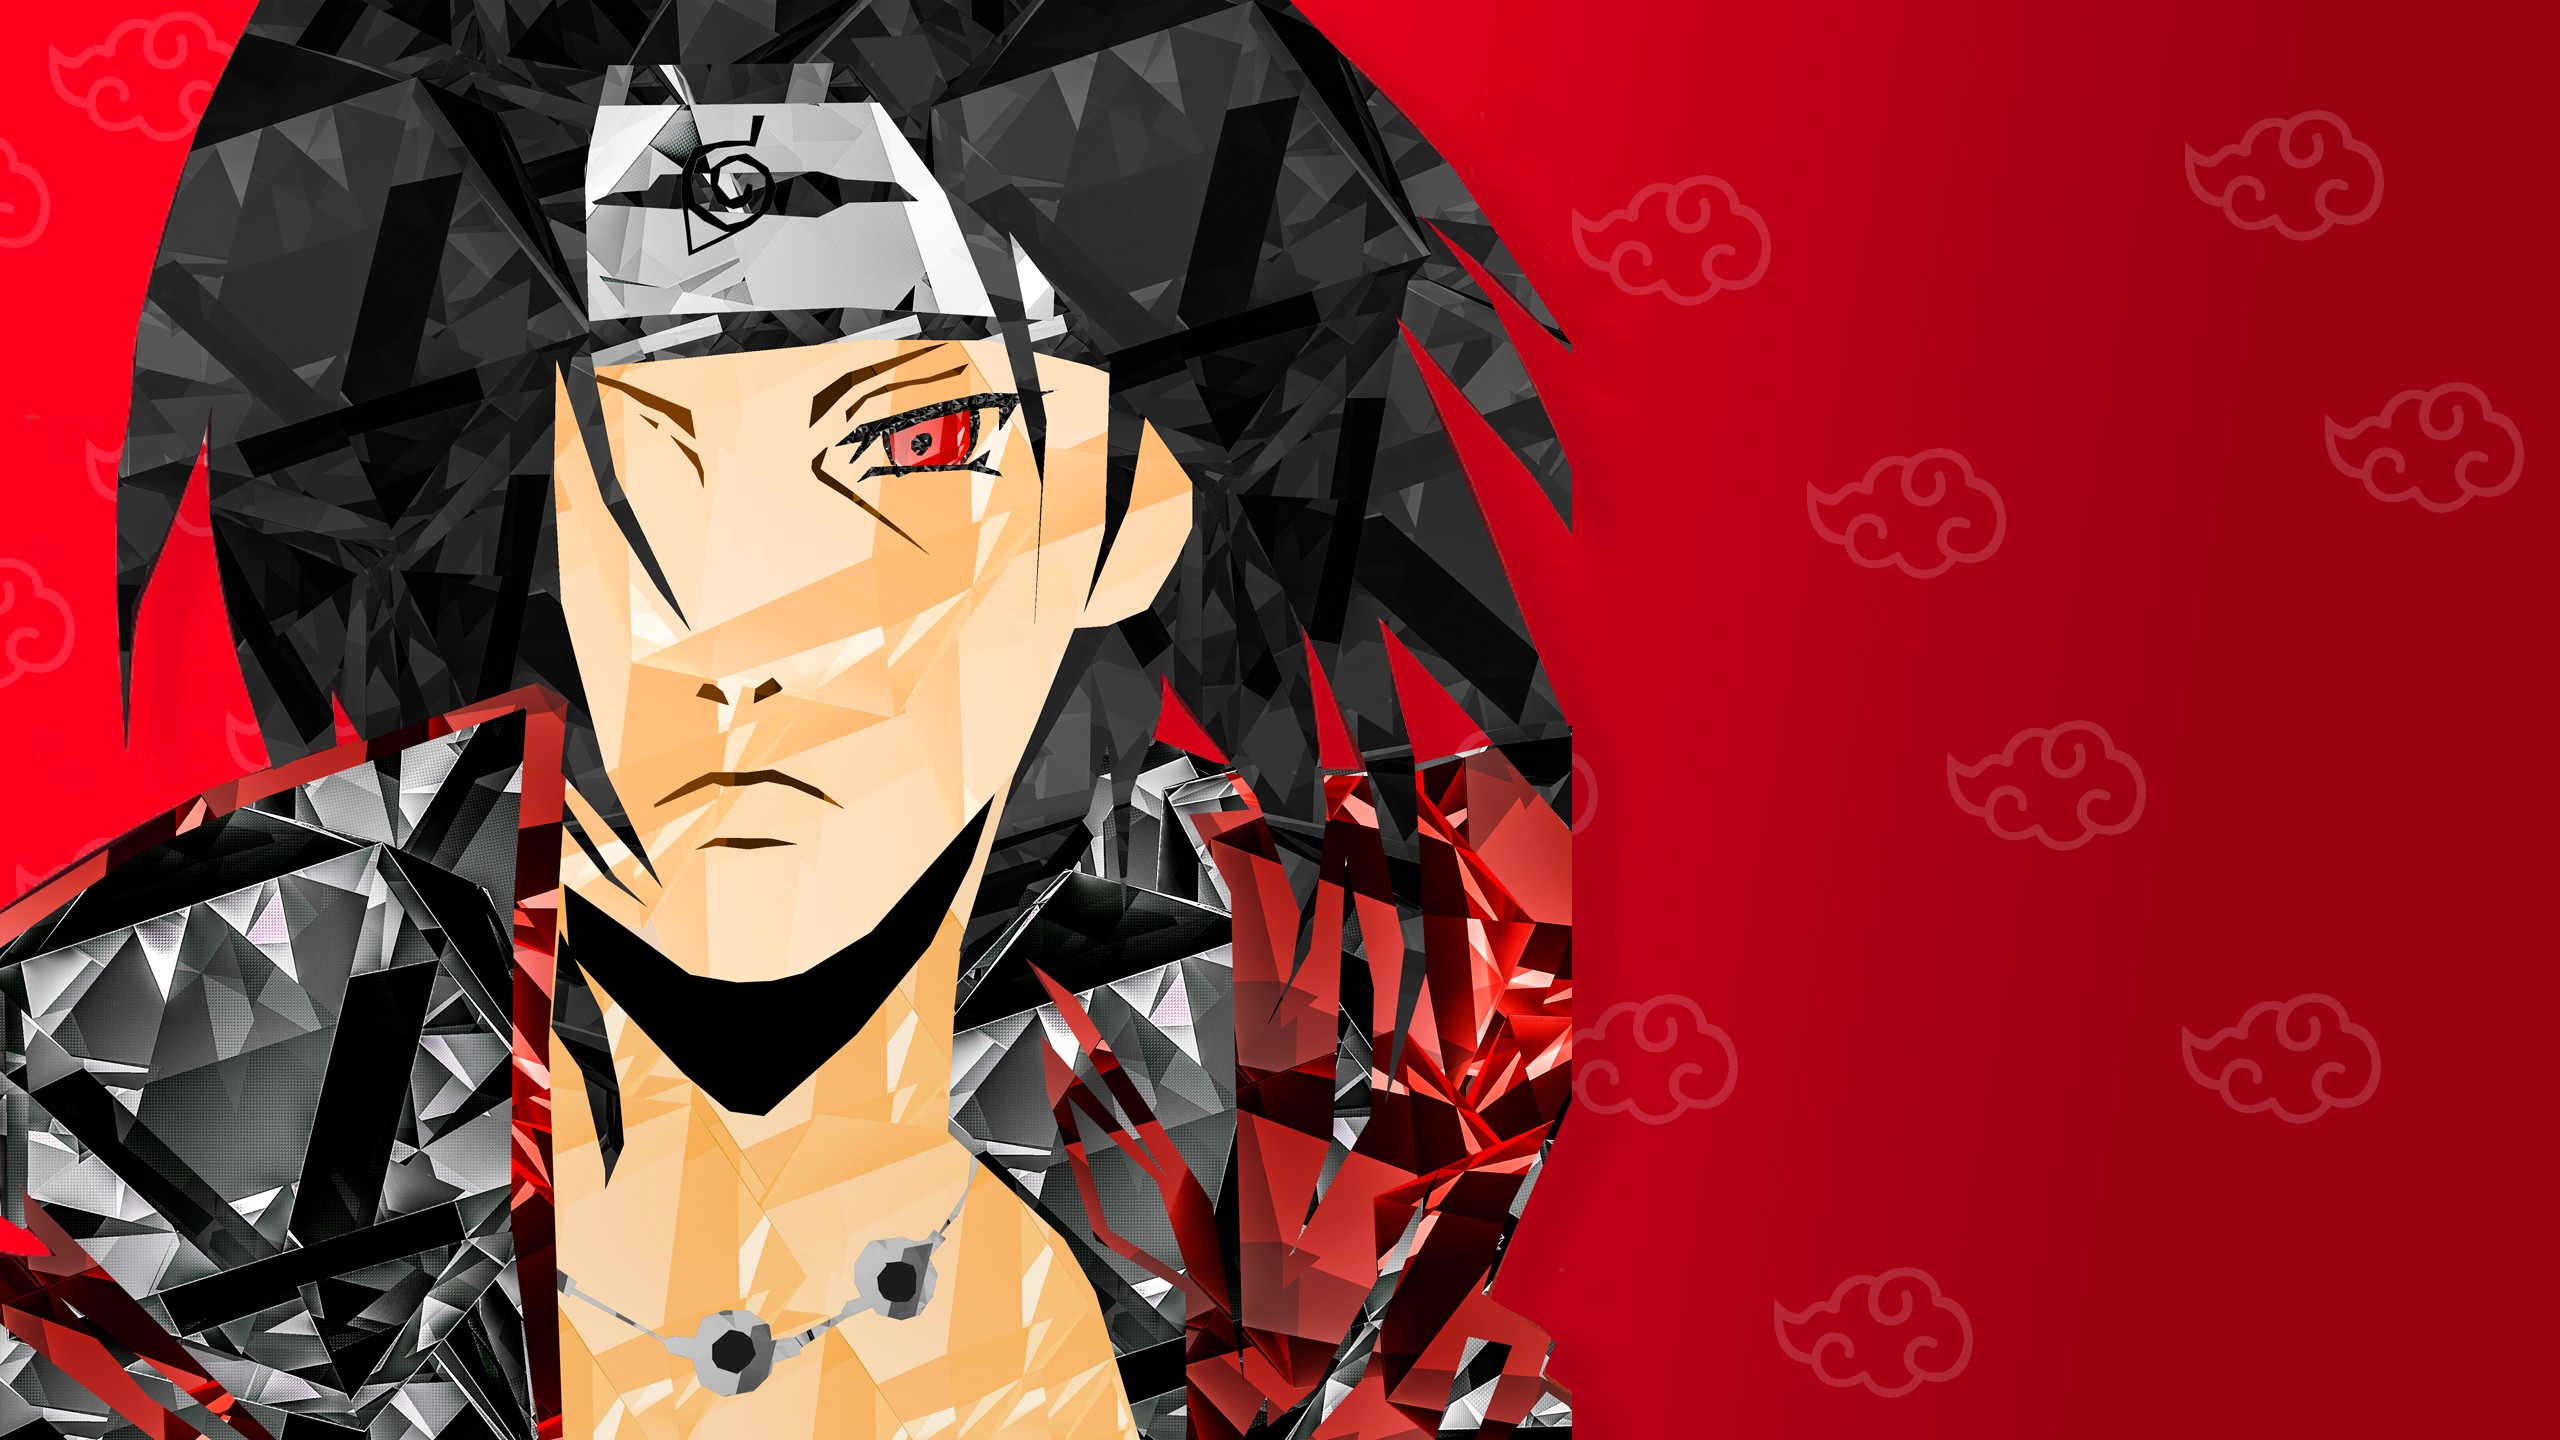 Anime 2560x1440 Uchiha Itachi Naruto Shippuden manga digital art face red background anime black hair simple background anime men